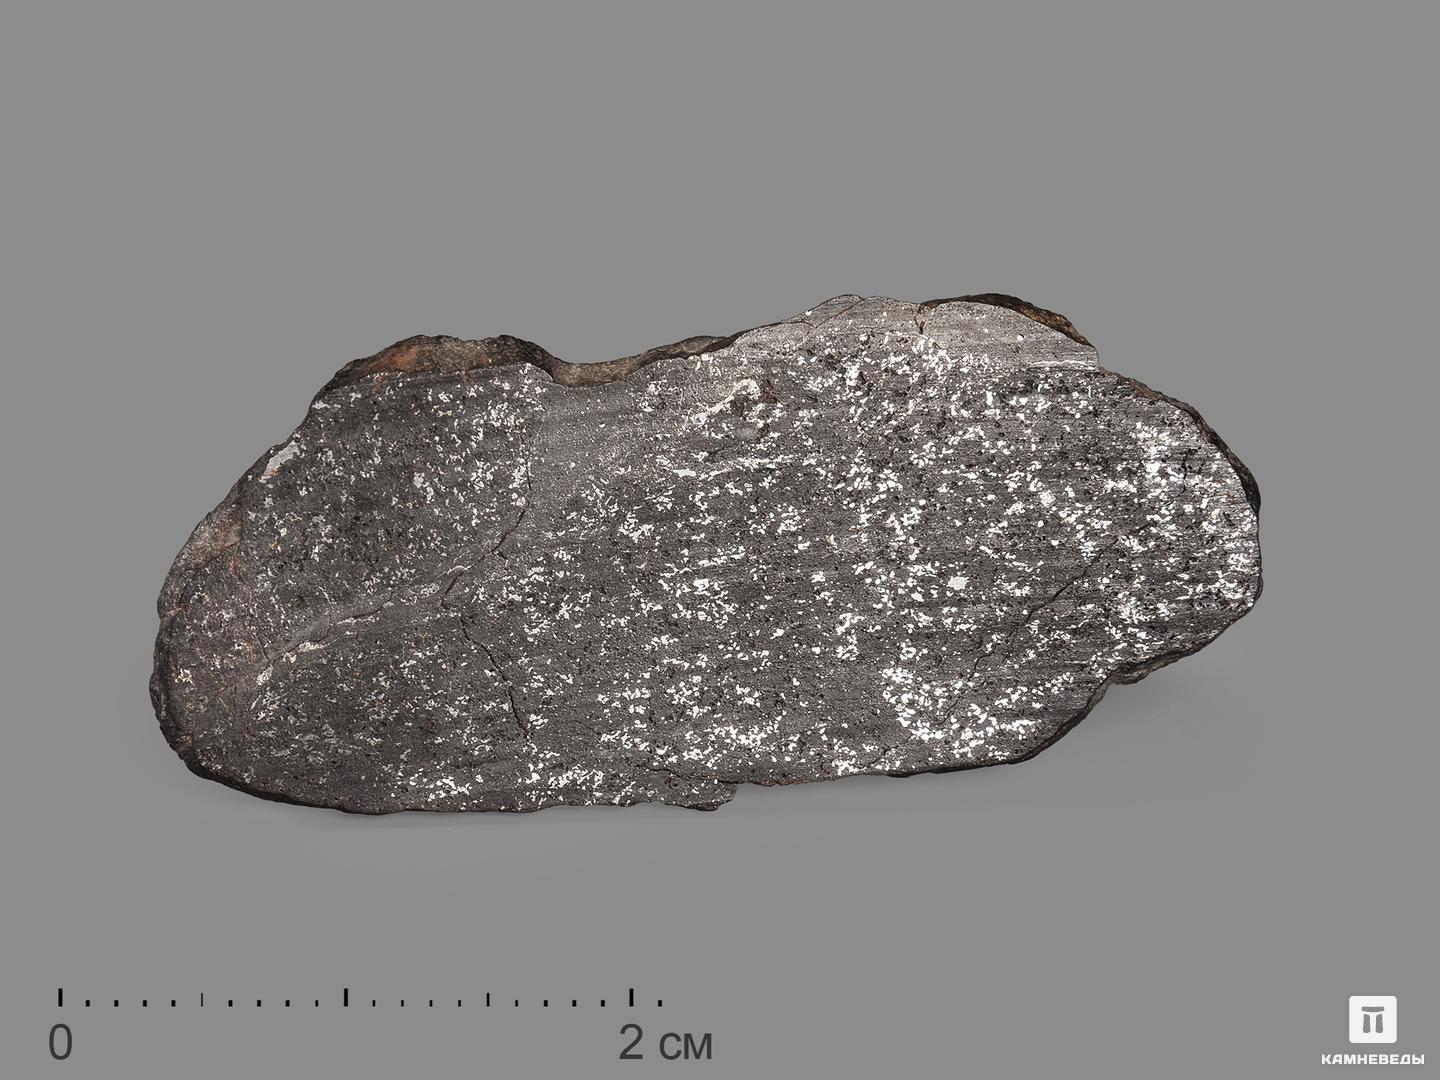 Метеорит Tassédet 004, пластина в боксе 3-4 см (2,4 г), 19803, фото 1